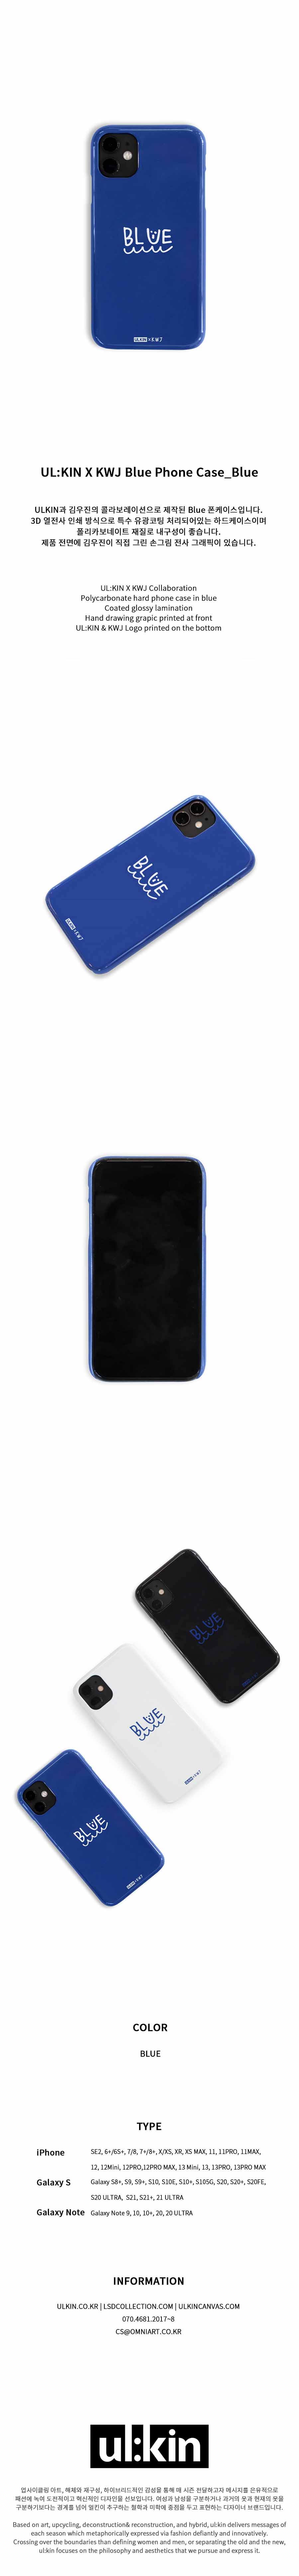 ULKIN-X-KWJ-Blue-Phone-Case_Blue_165458.jpg